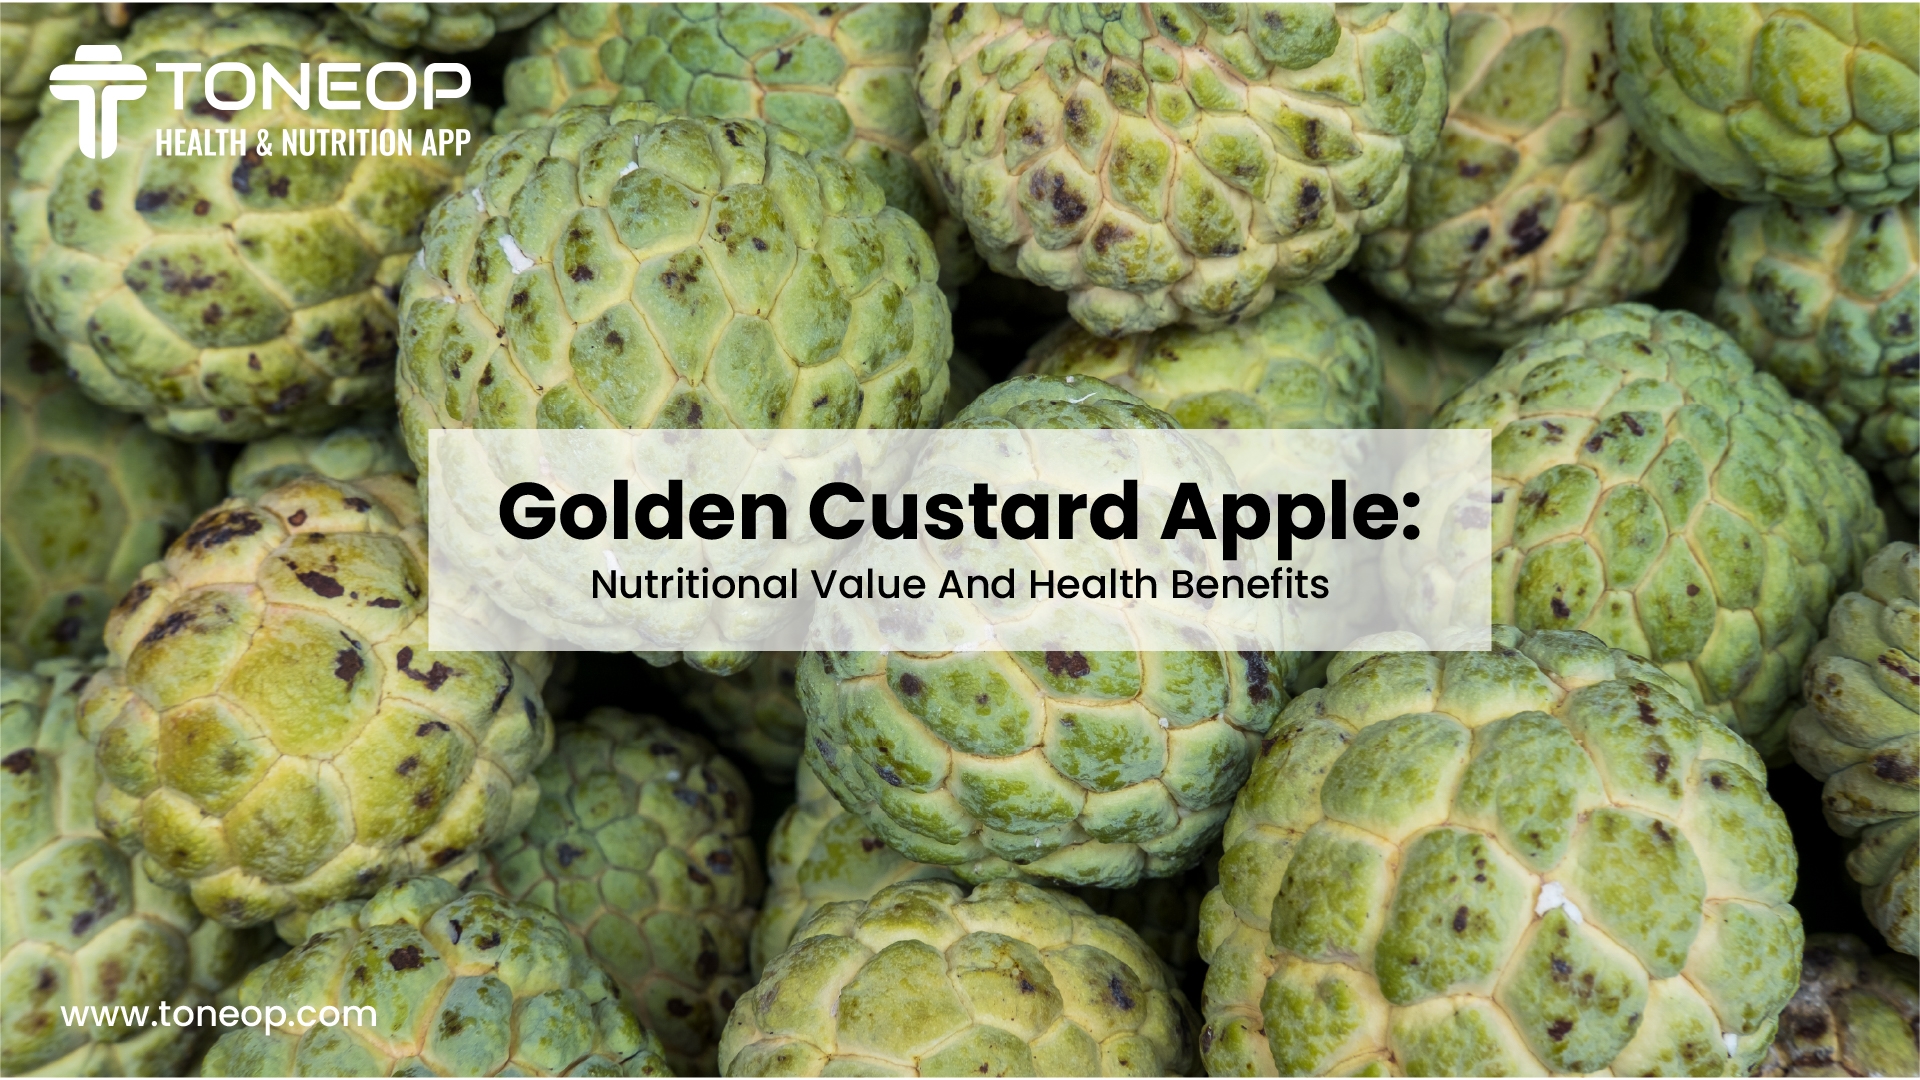 Golden Custard Apple: Nutritional Value And Health Benefits